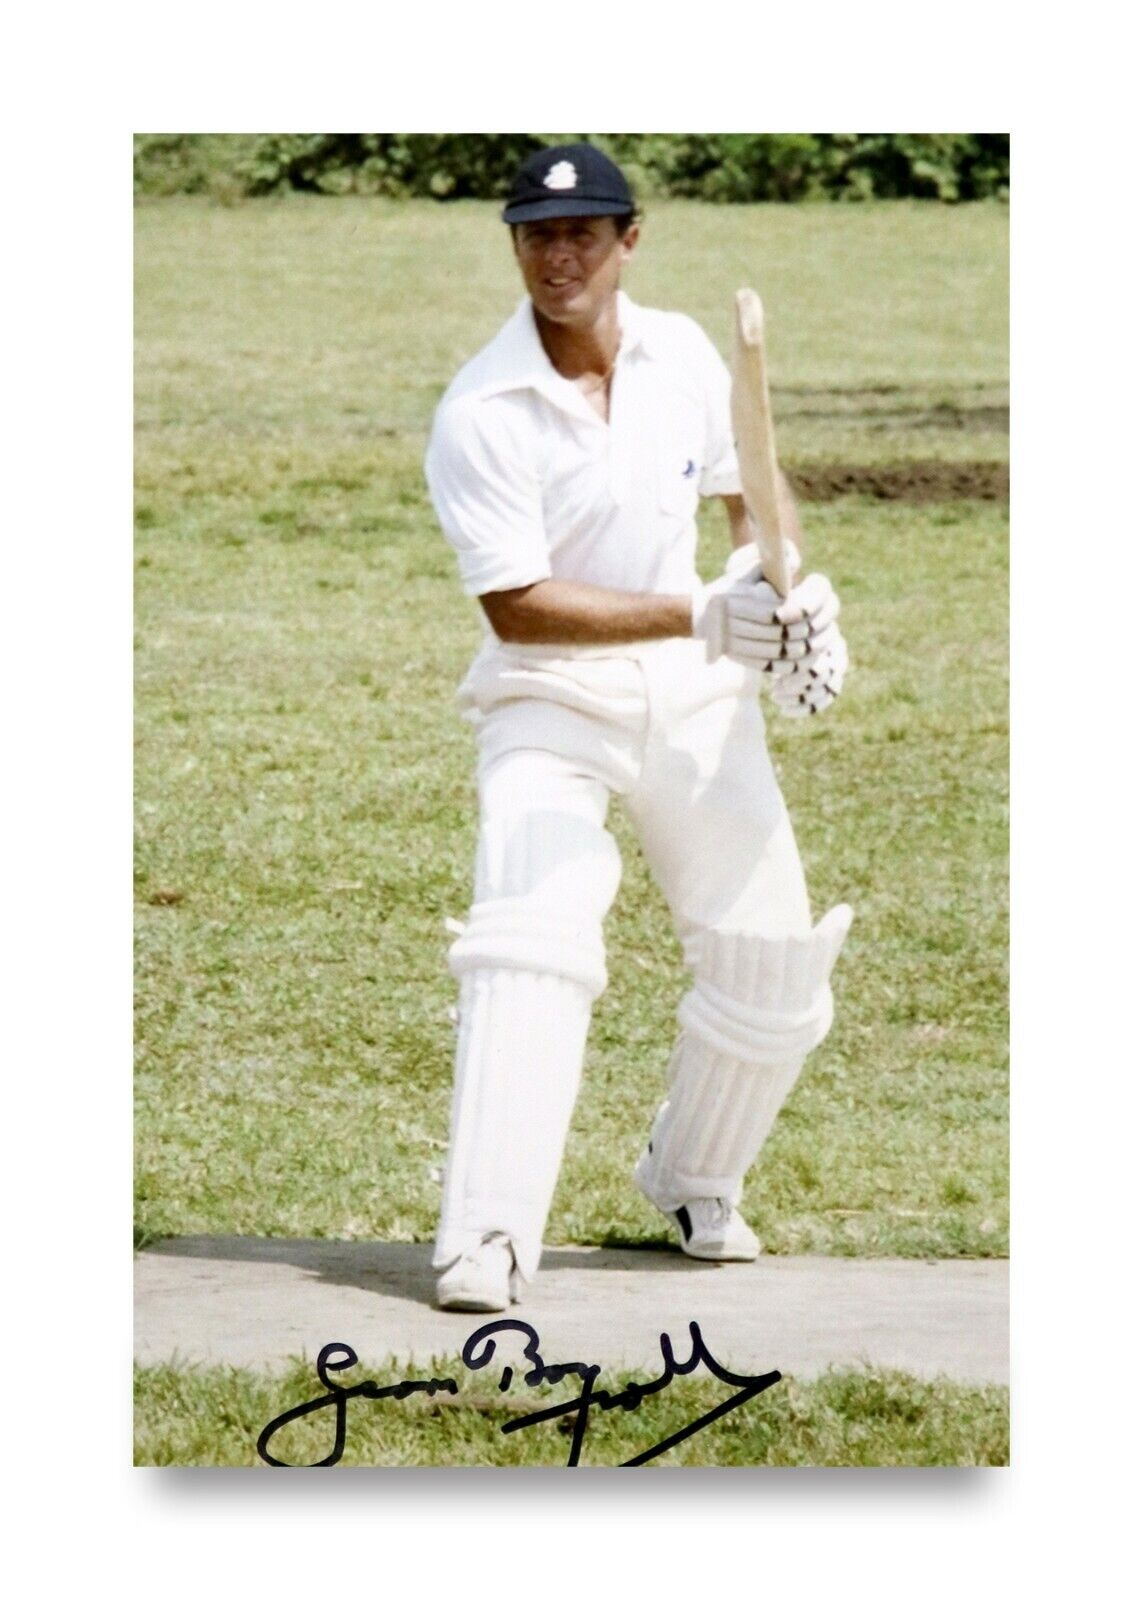 Sir Geoffrey Boycott Signed 6x4 Photo Poster painting England Cricket Autograph Memorabilia +COA